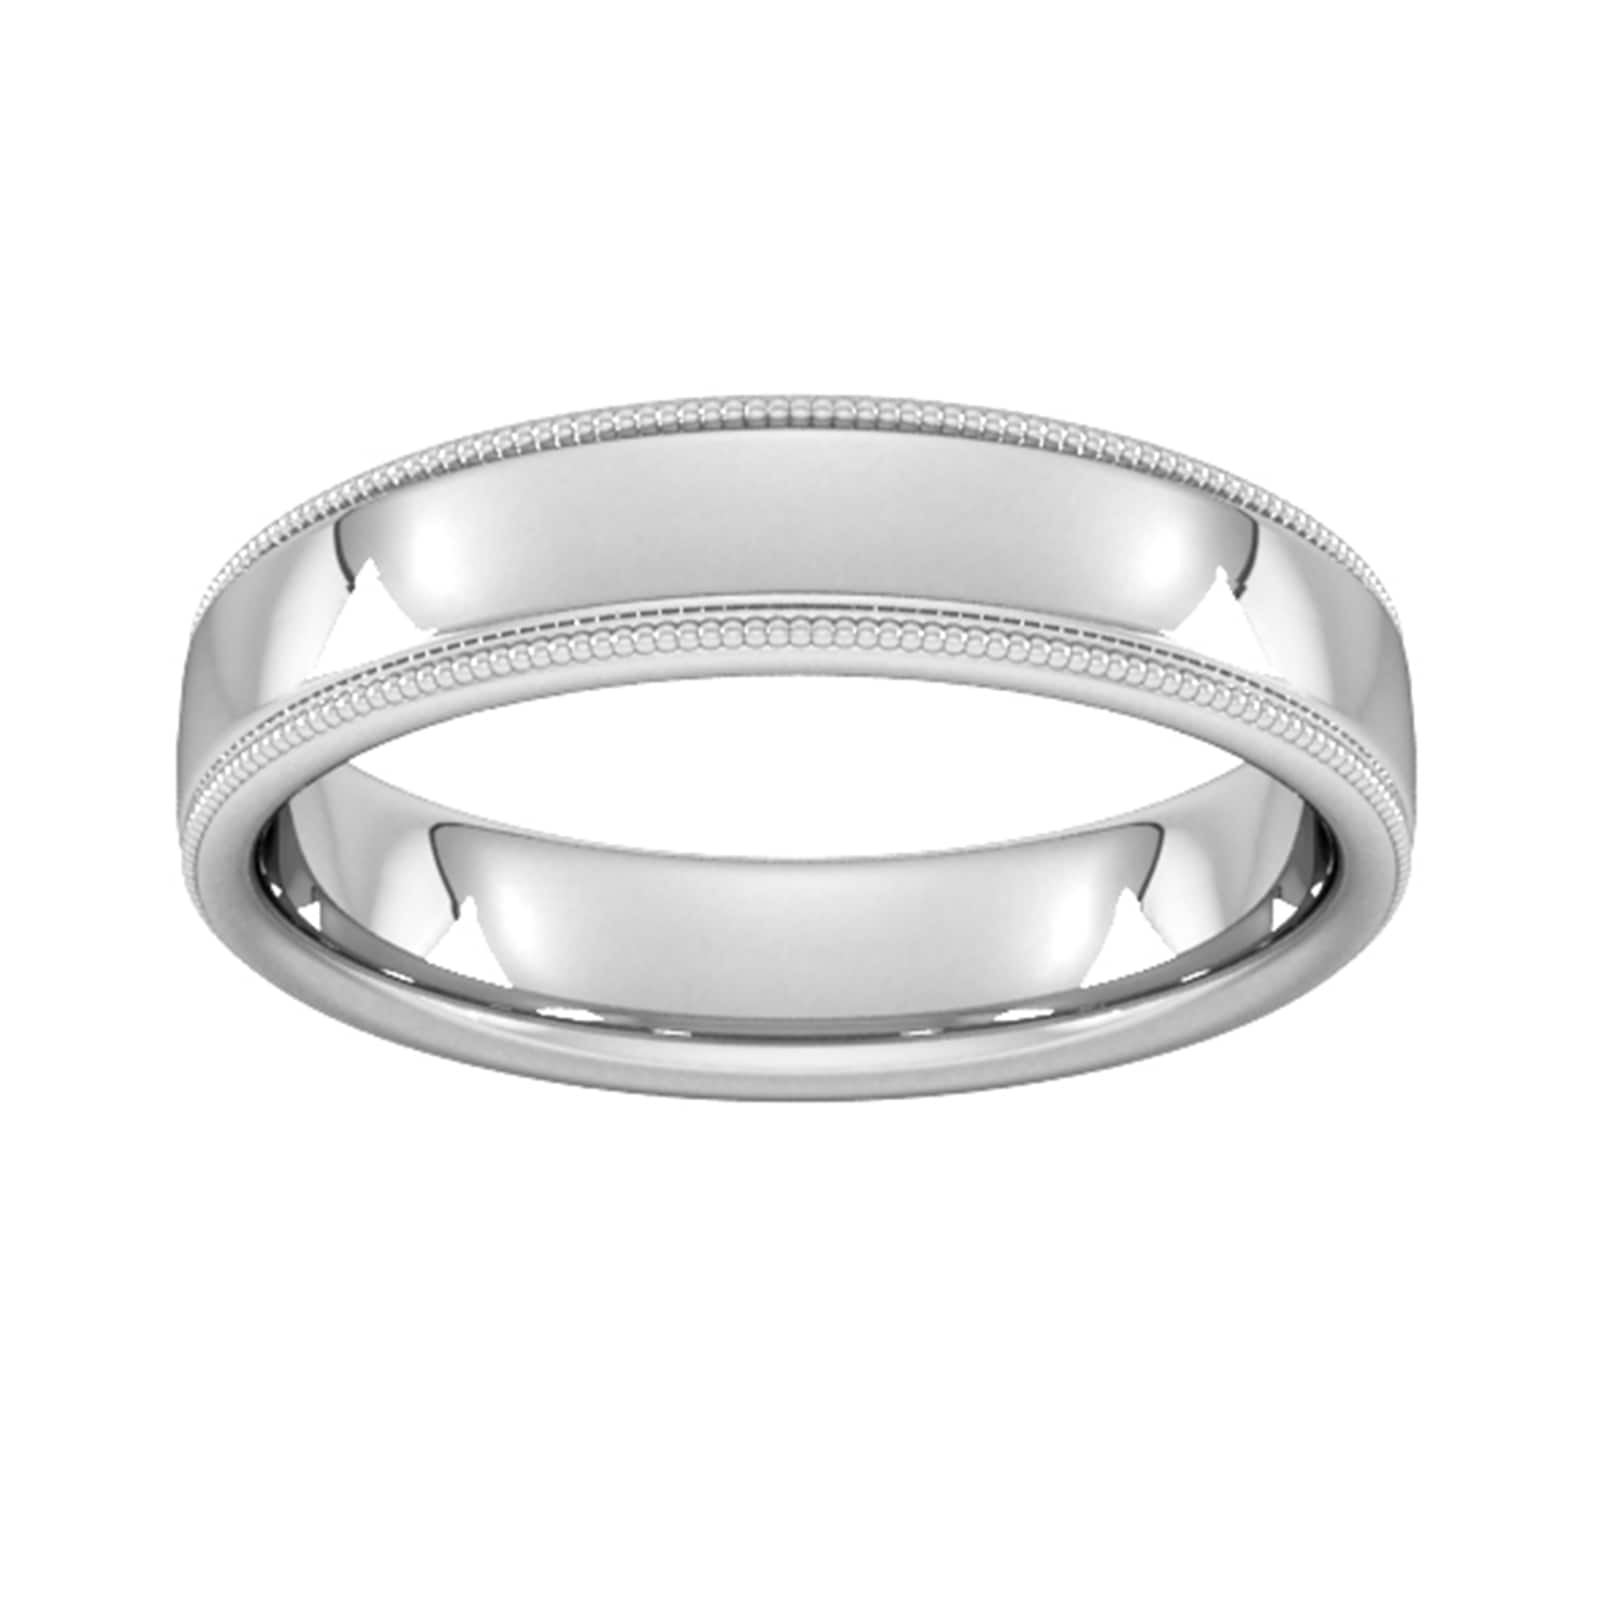 5mm Slight Court Extra Heavy Milgrain Edge Wedding Ring In 9 Carat White Gold - Ring Size L